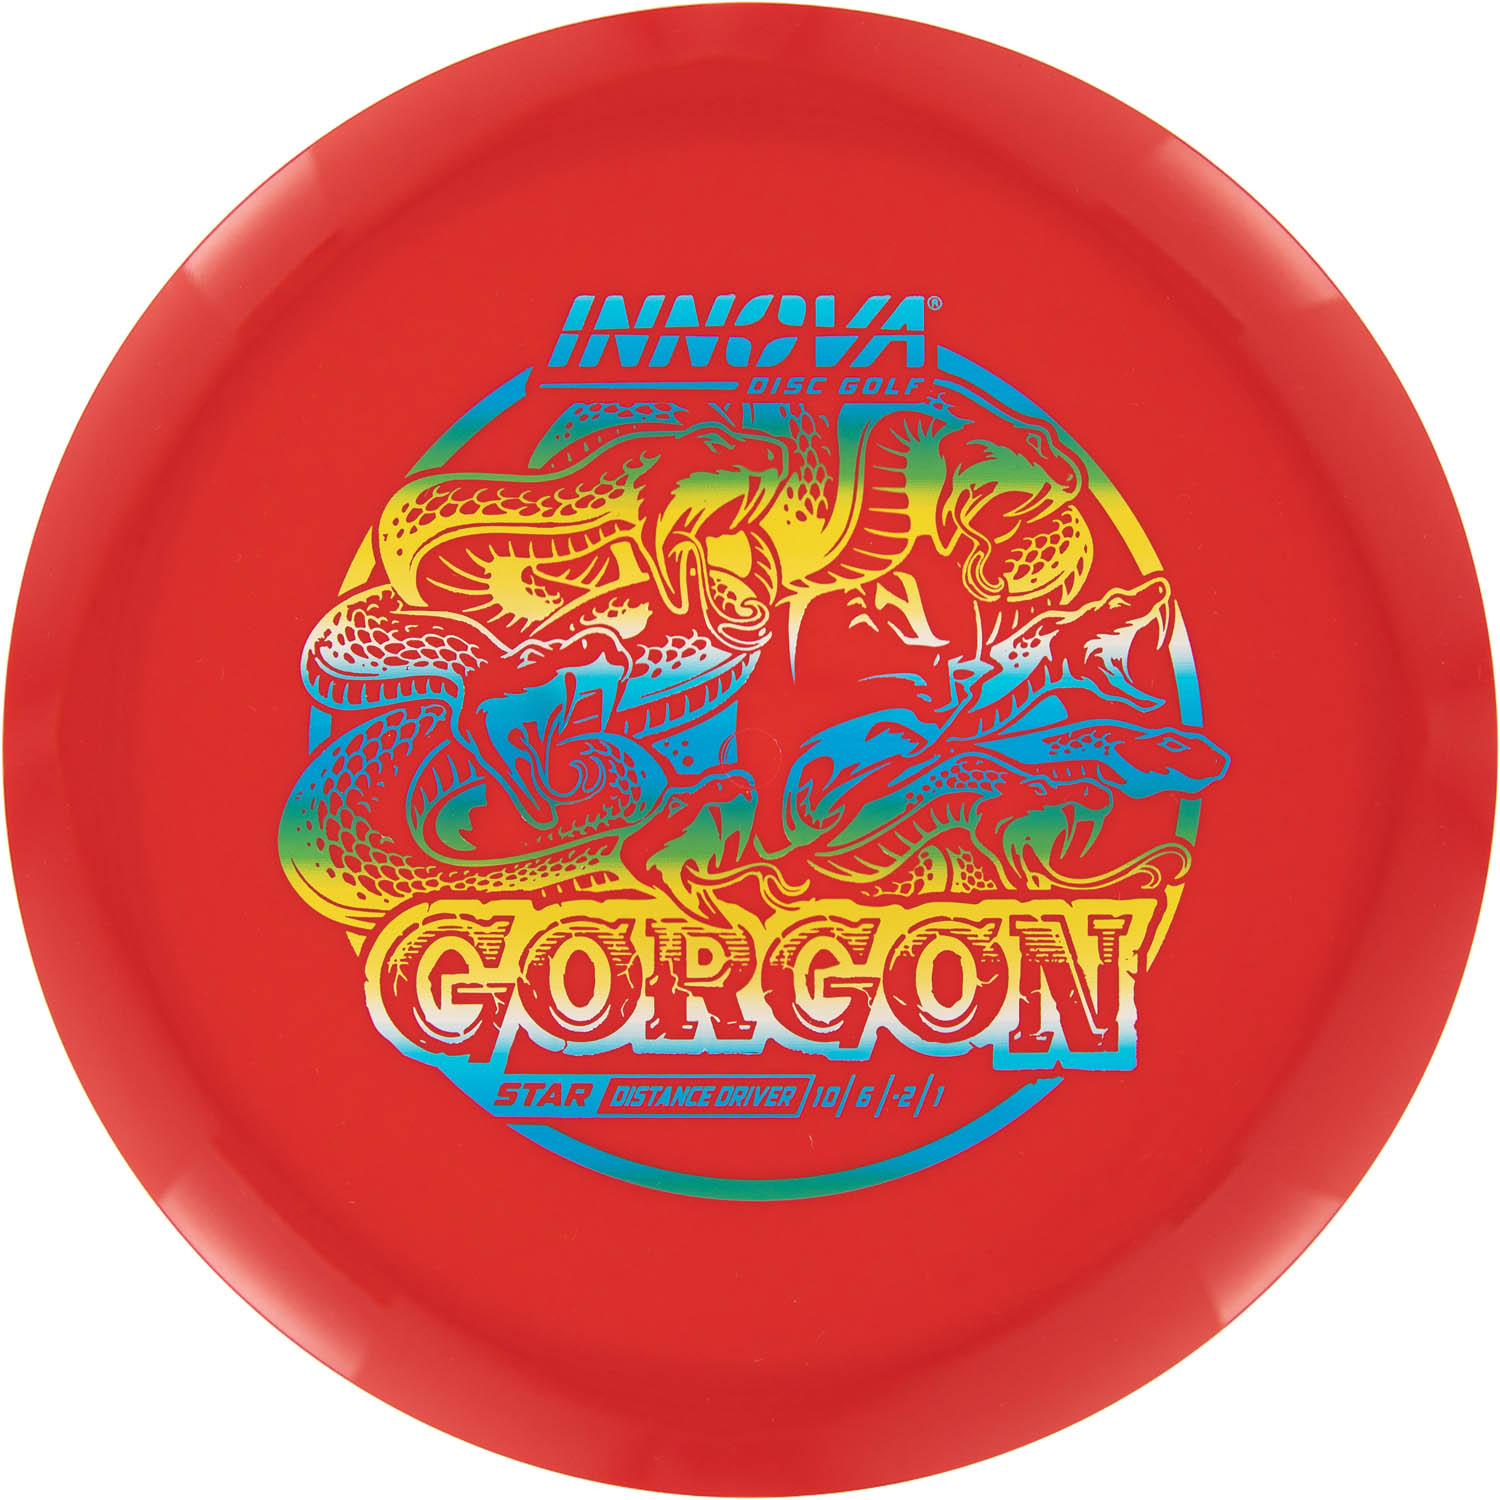 Innova Star Gorgon - Understable Distance Driver. Red color.